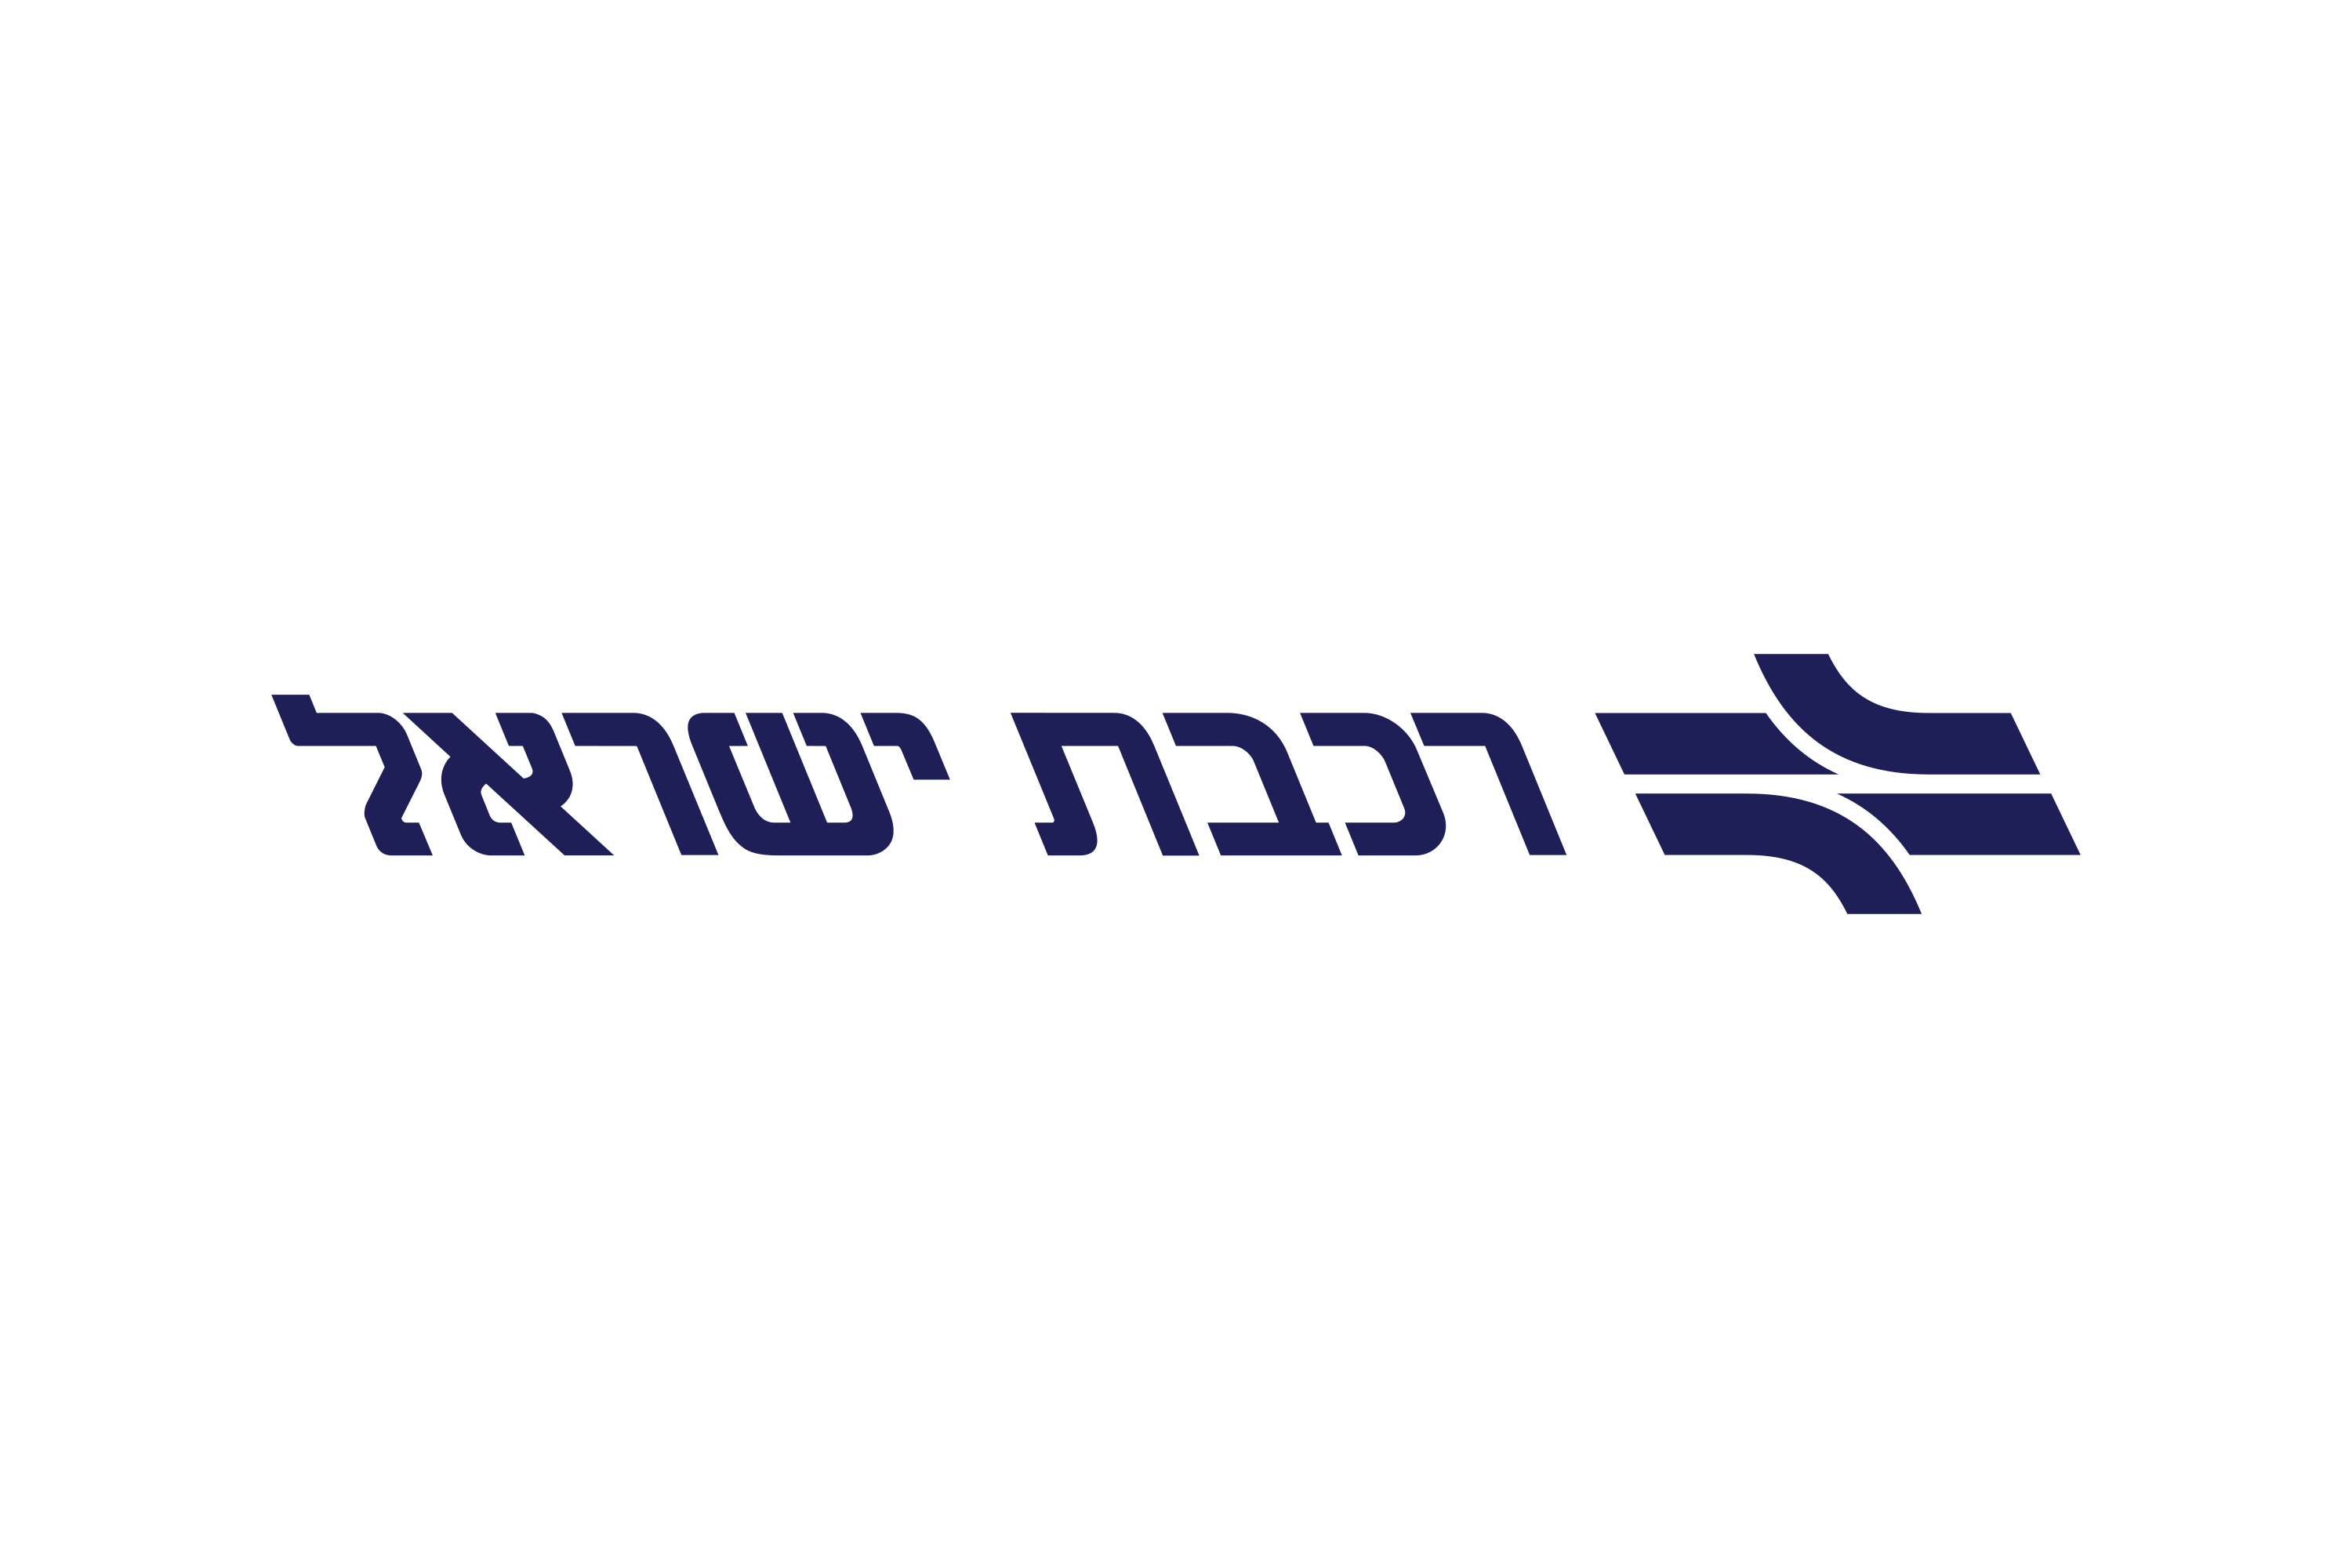 Download Israel Railways Logo in SVG Vector or PNG File Format - Logo.wine